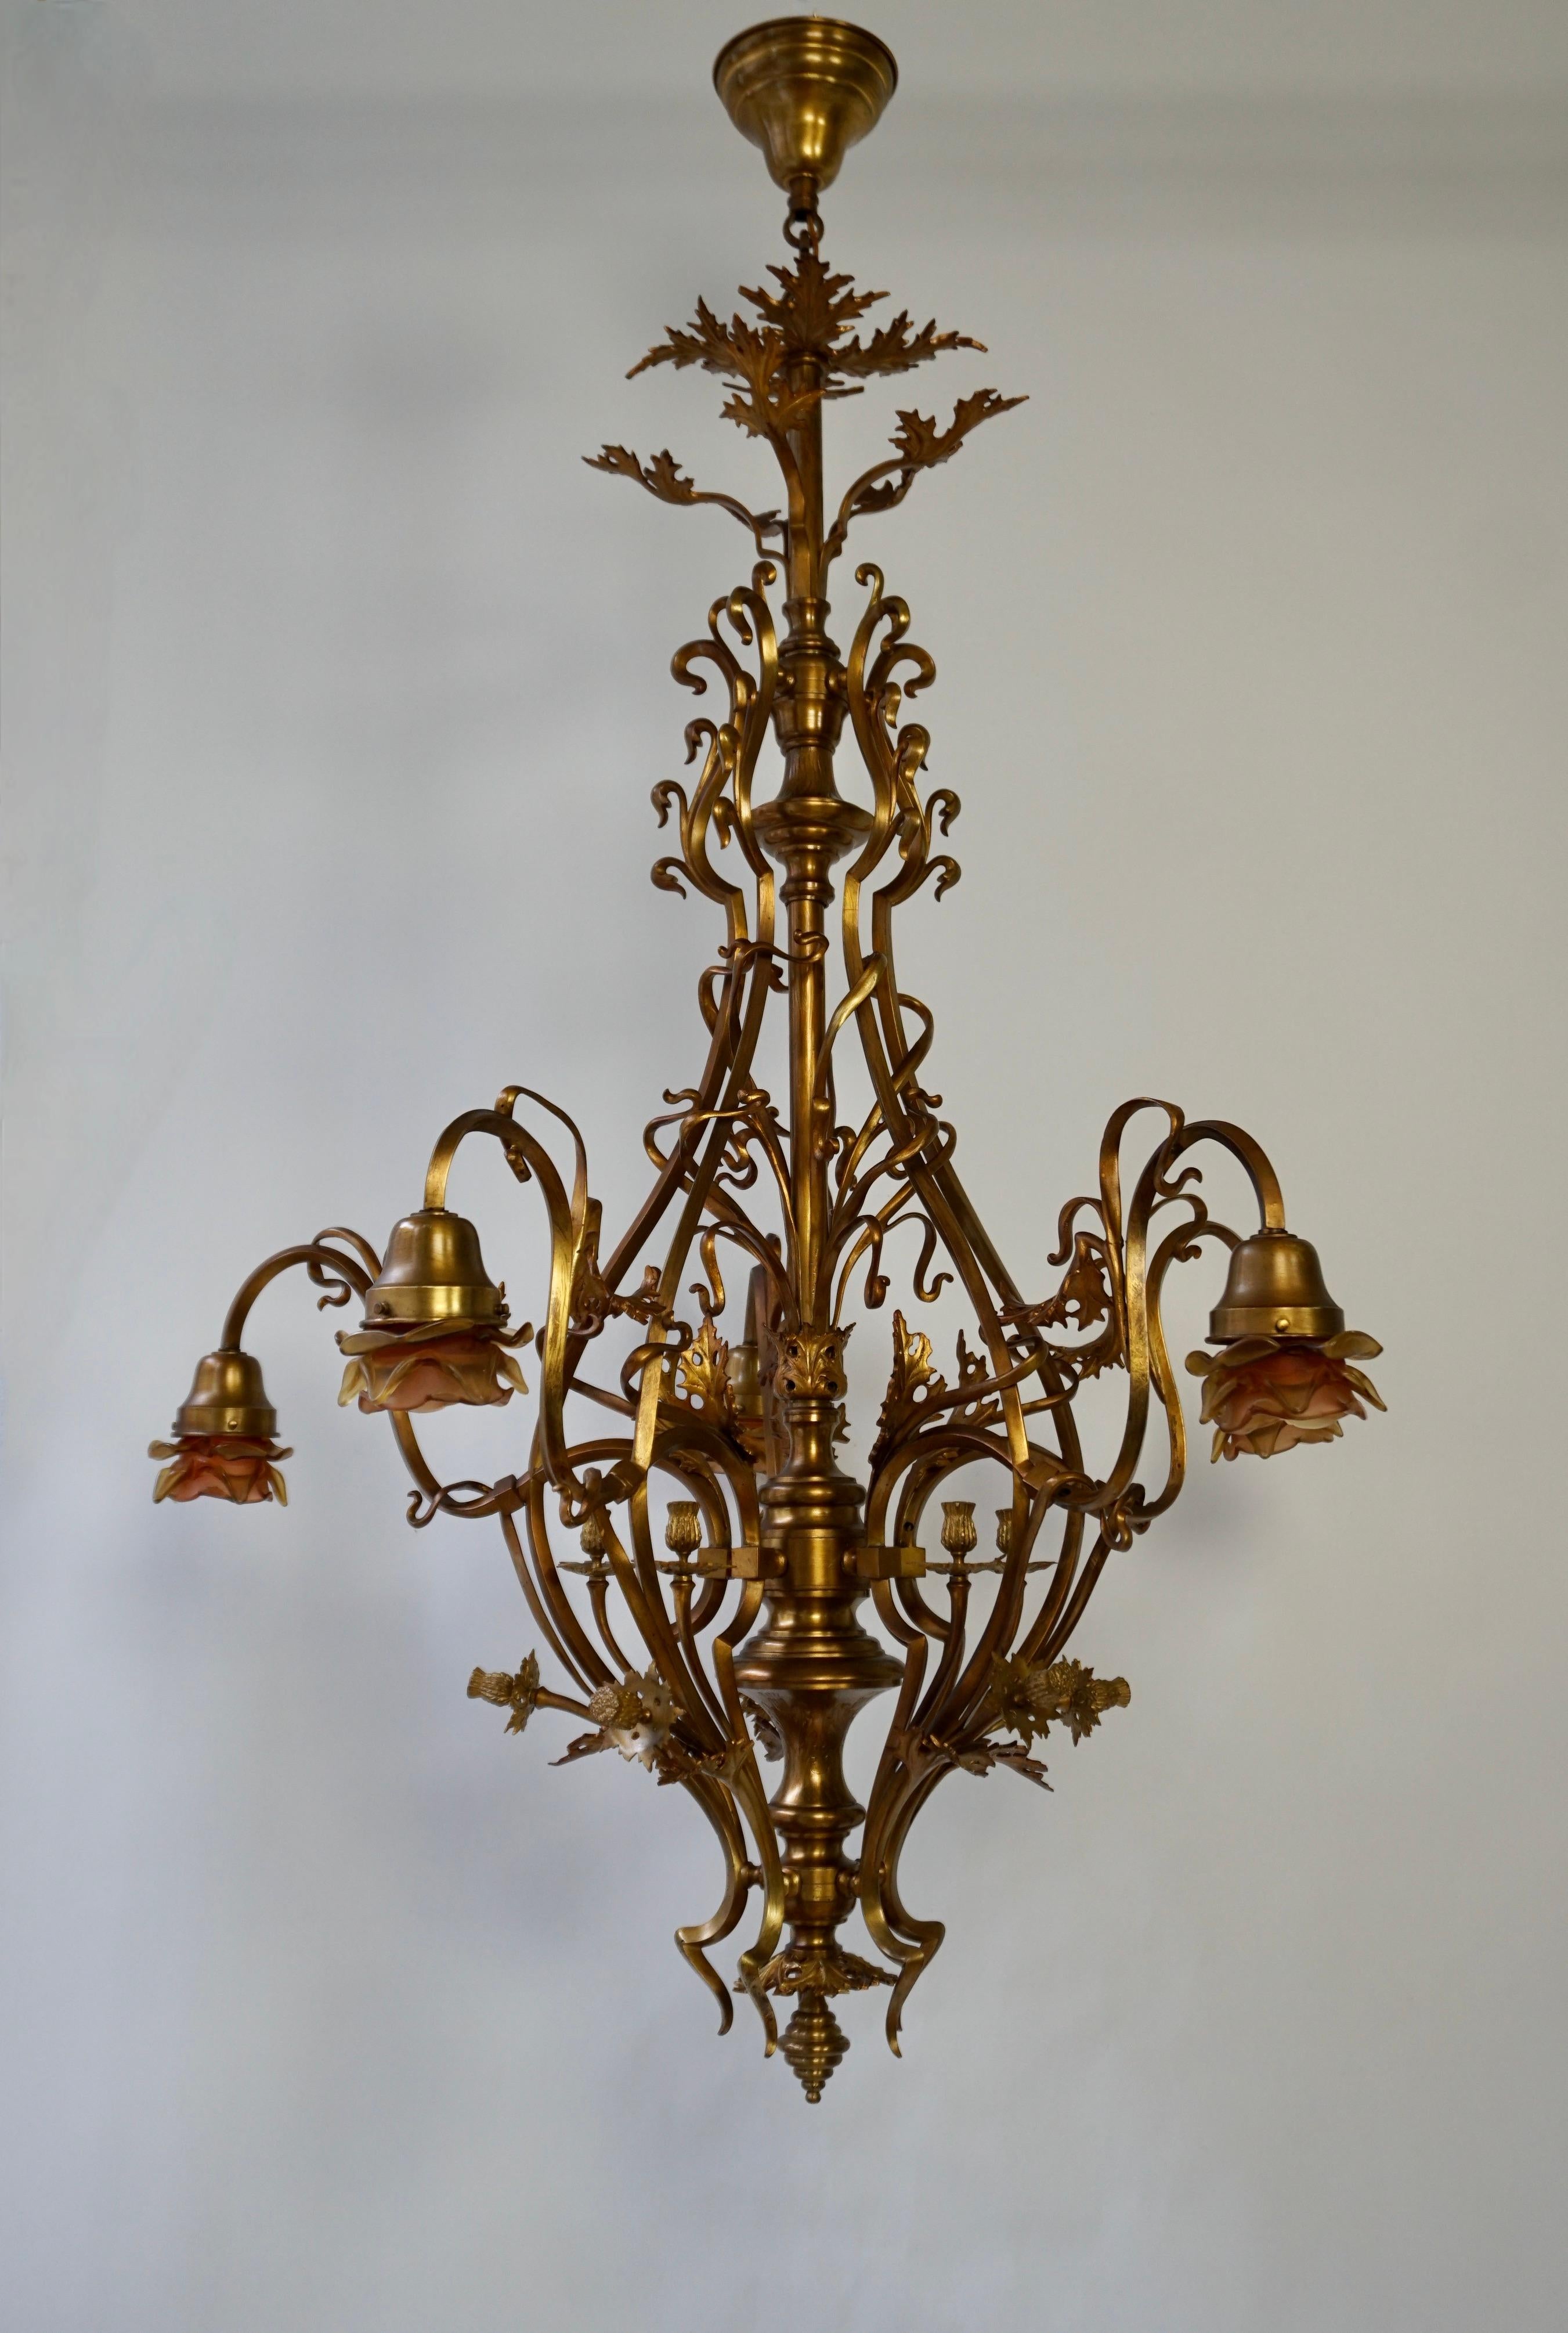 20th Century Large and Top Quality, Elegant & Exquisite 5 Light Art Nouveau Chandelier For Sale